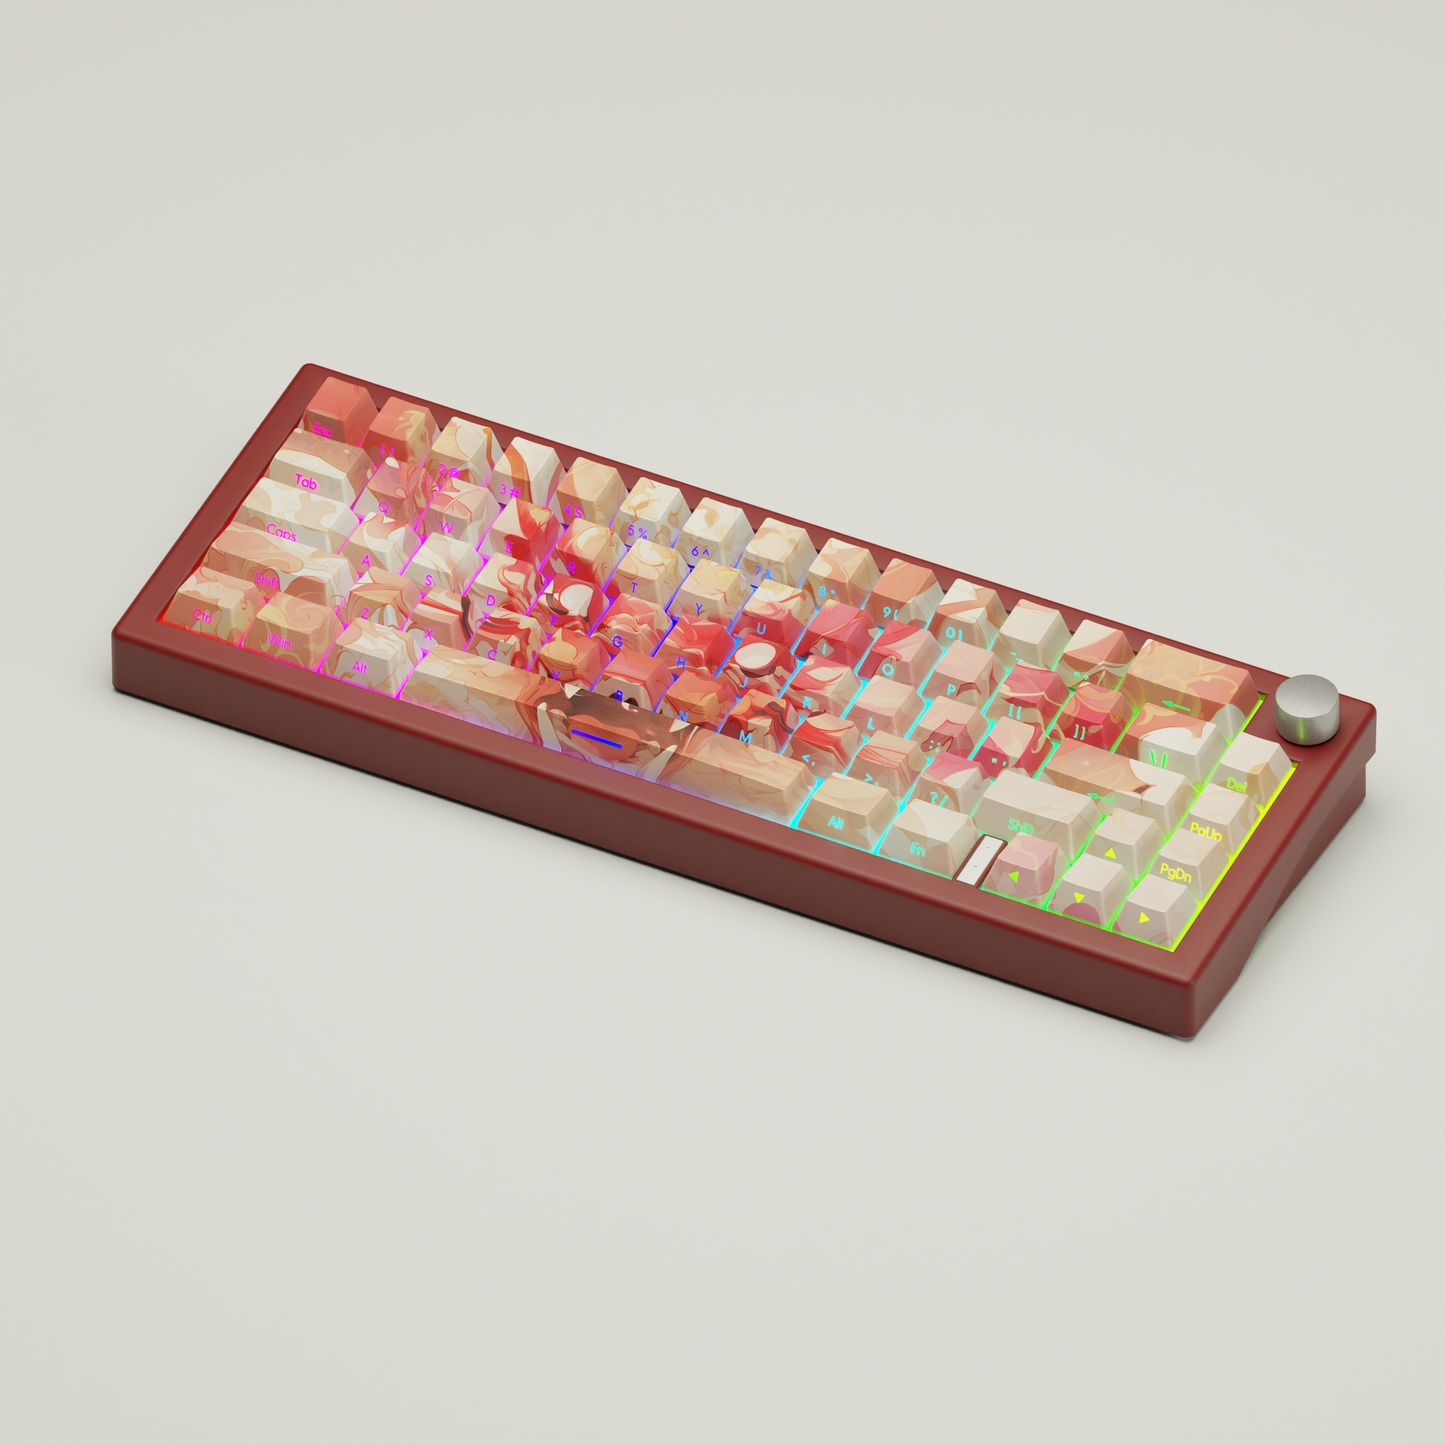 Fire Dragon GMK67 Keyboard | Designed By Serenity Starlight